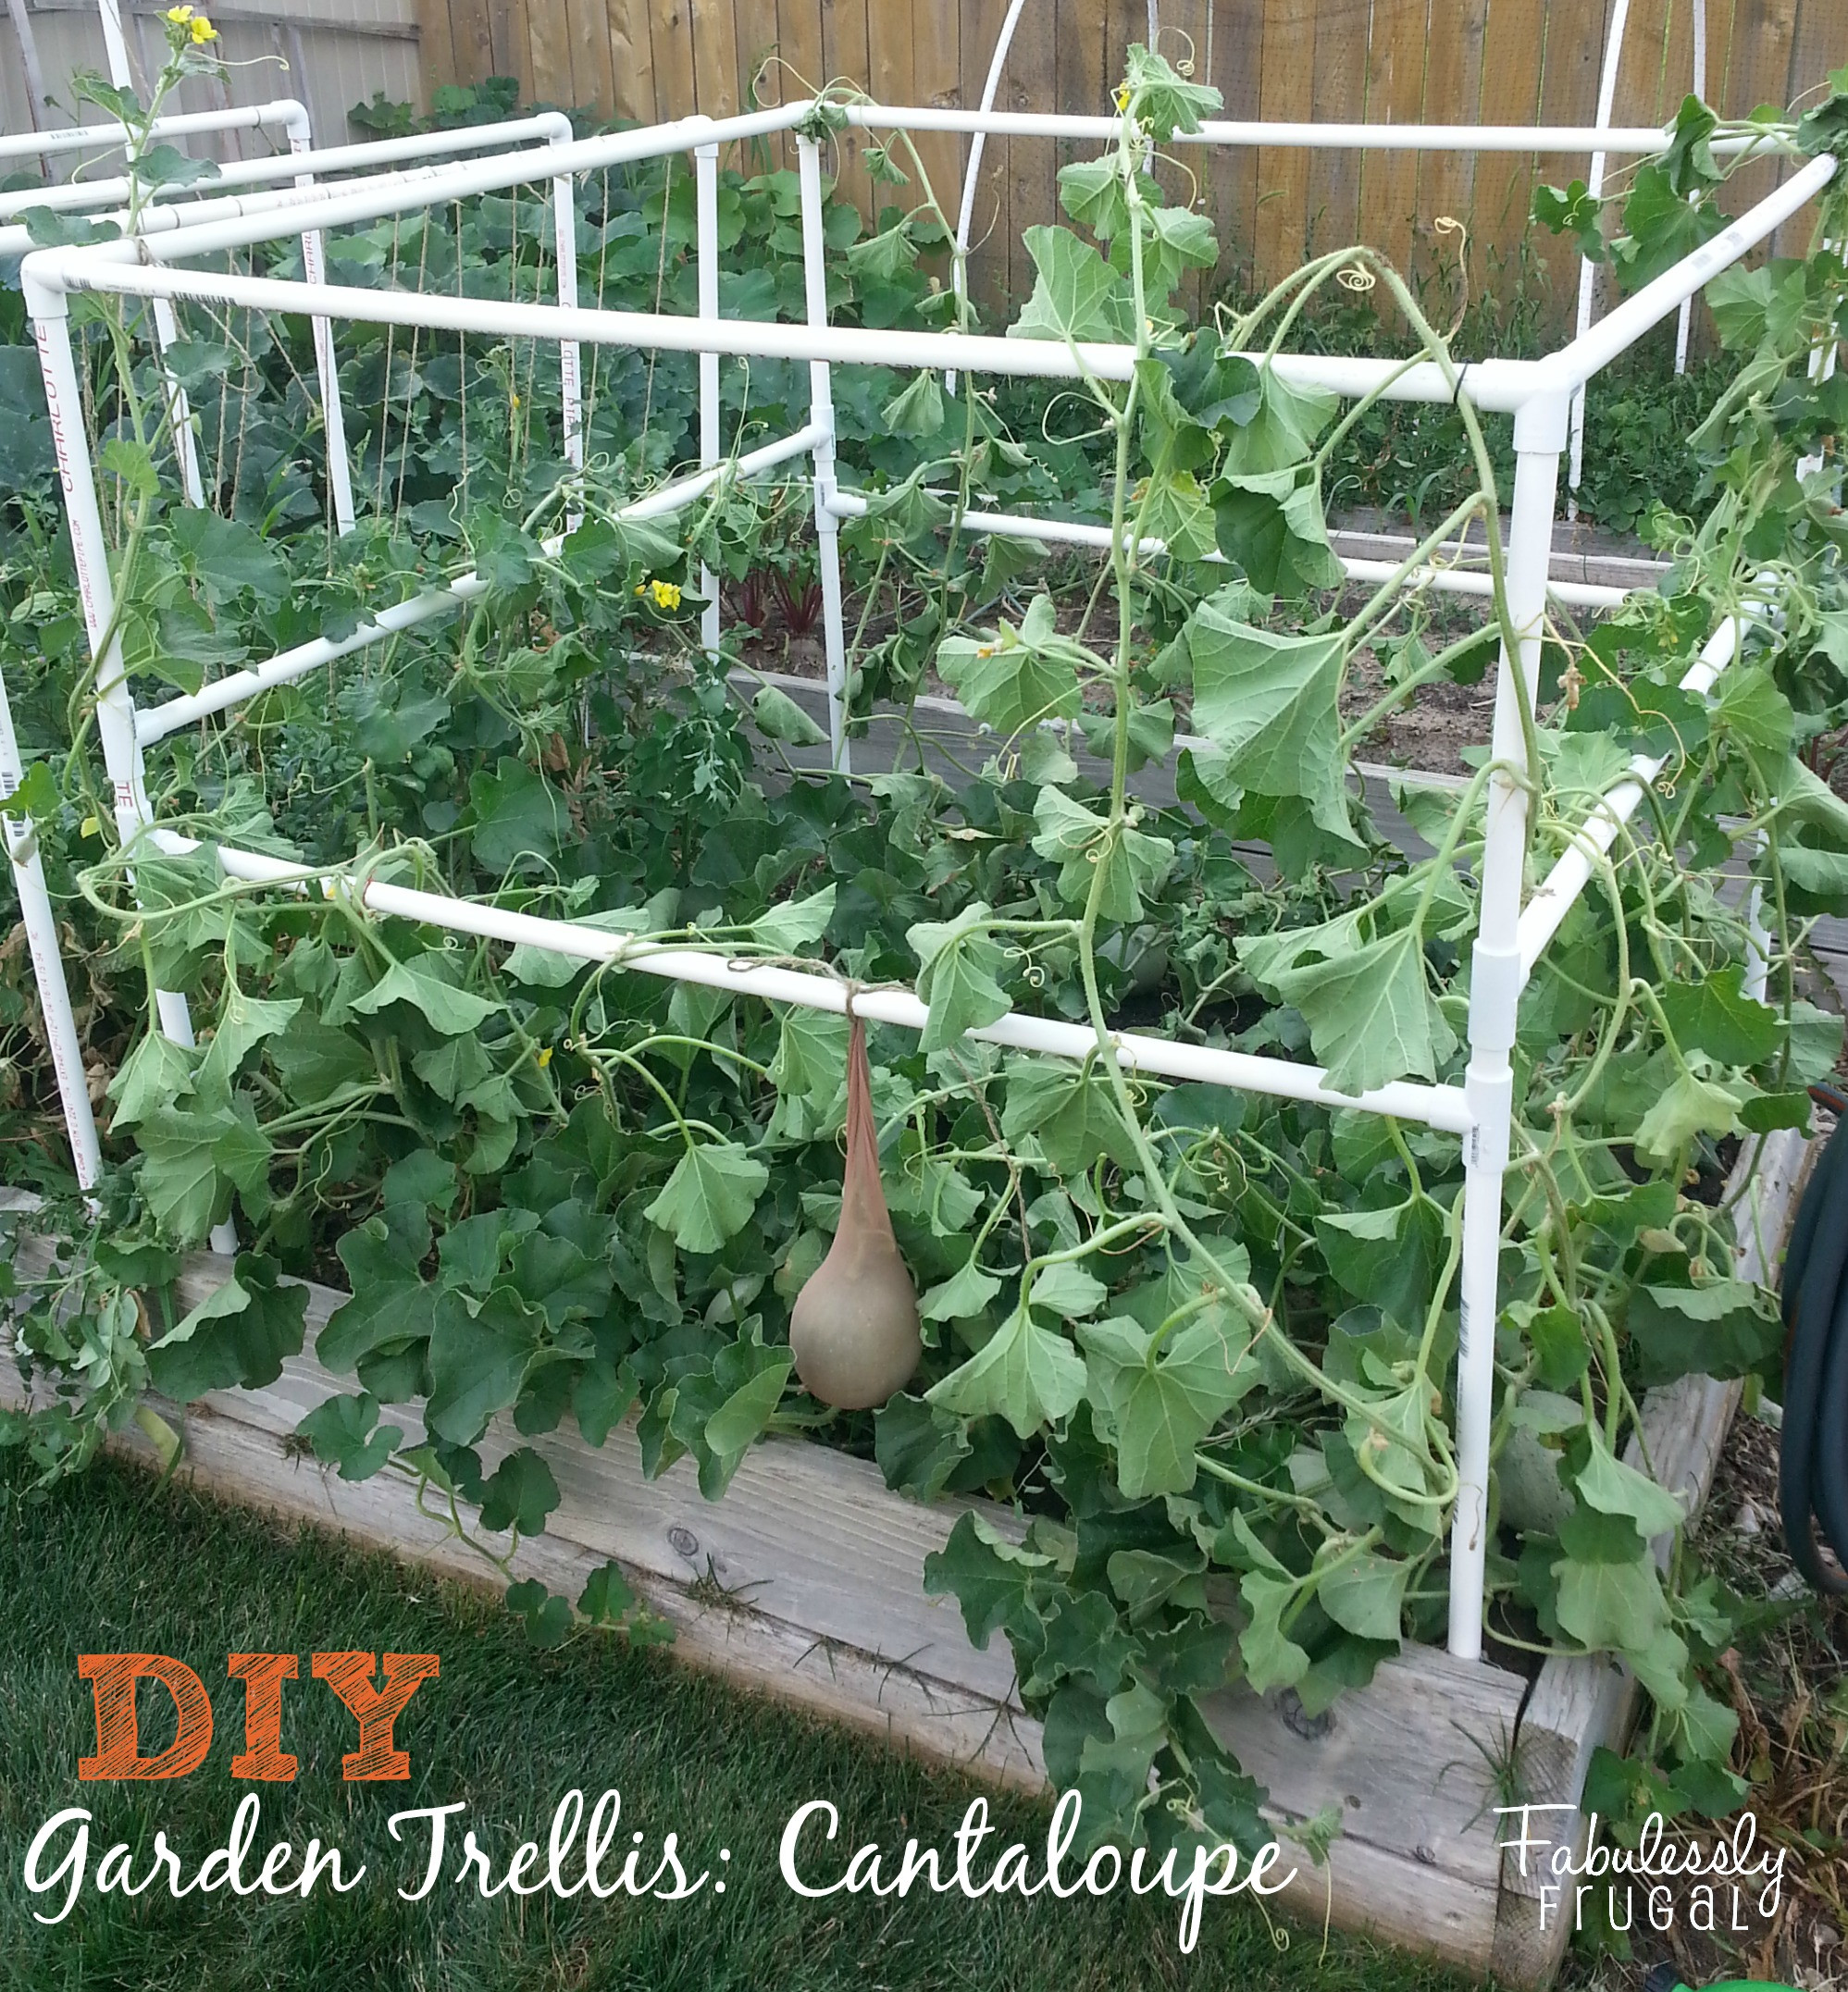 Best ideas about DIY Garden Trellises
. Save or Pin DIY Garden Trellis Part 2 Now.